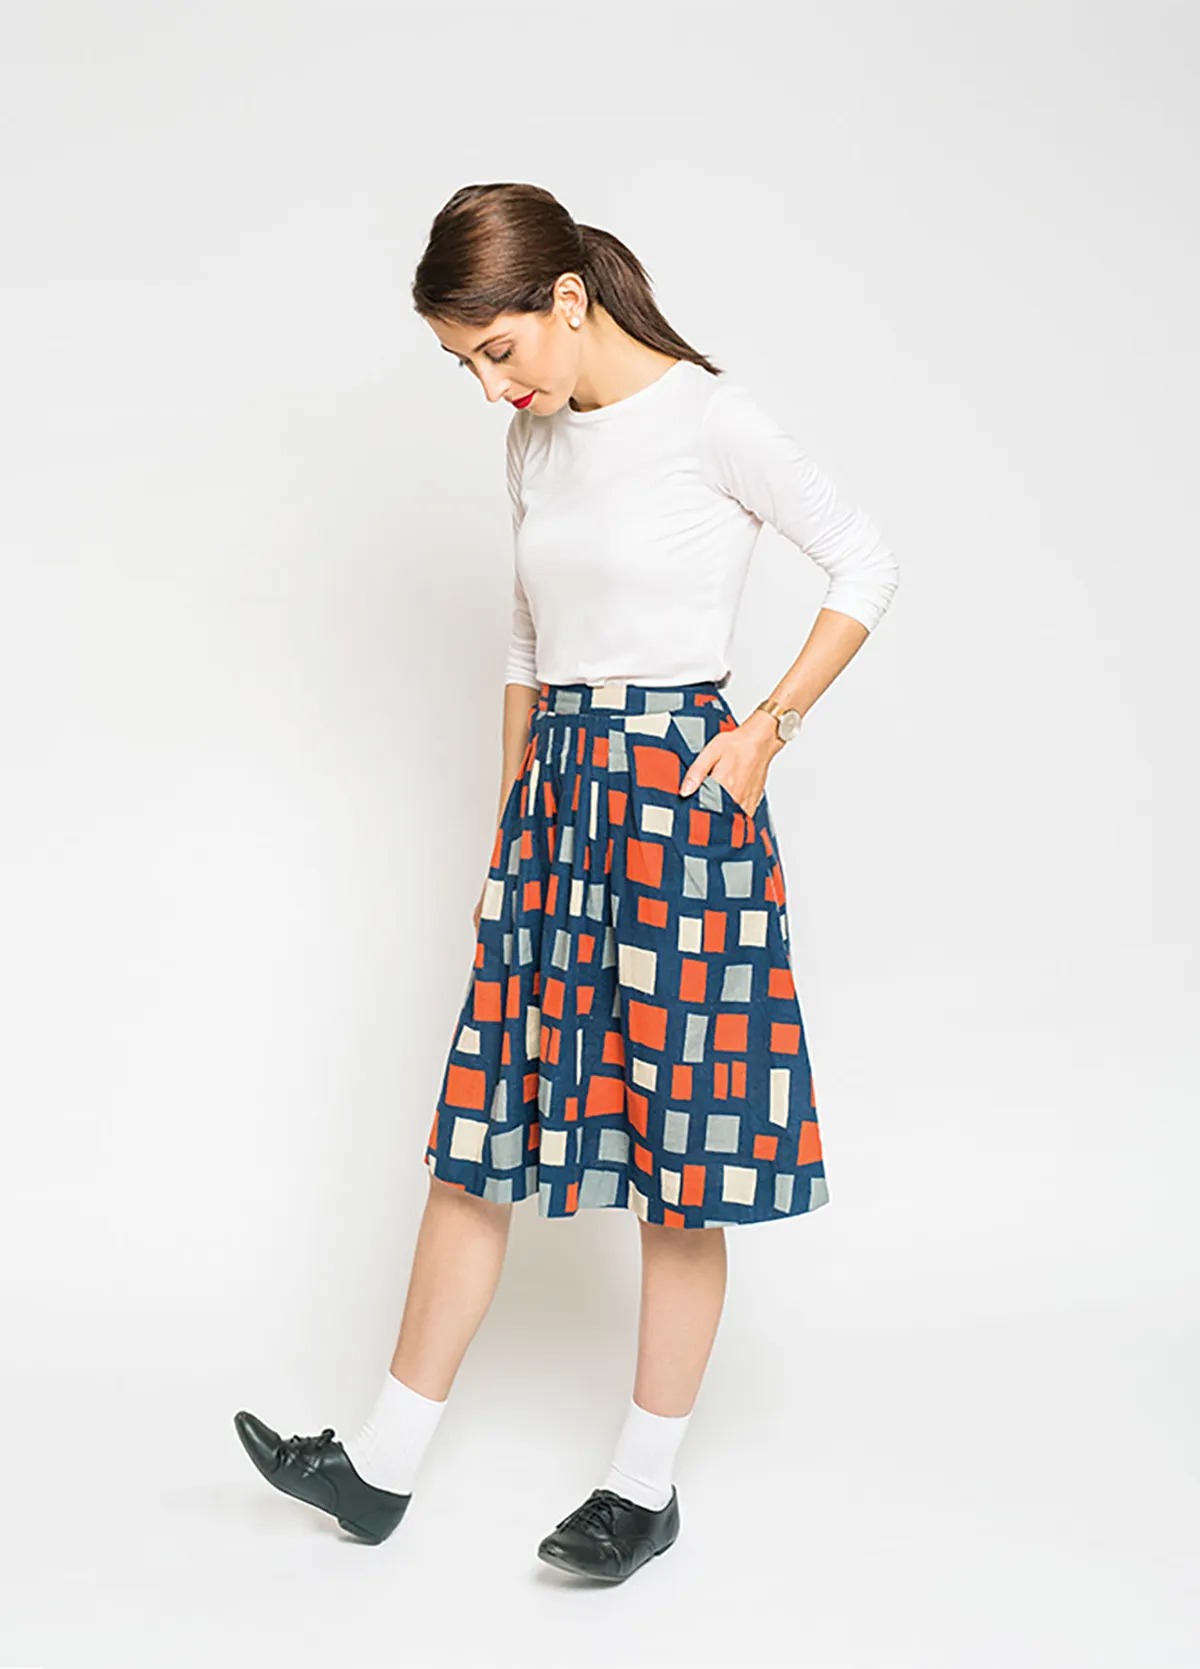 Peppermint vintage skirt pattern